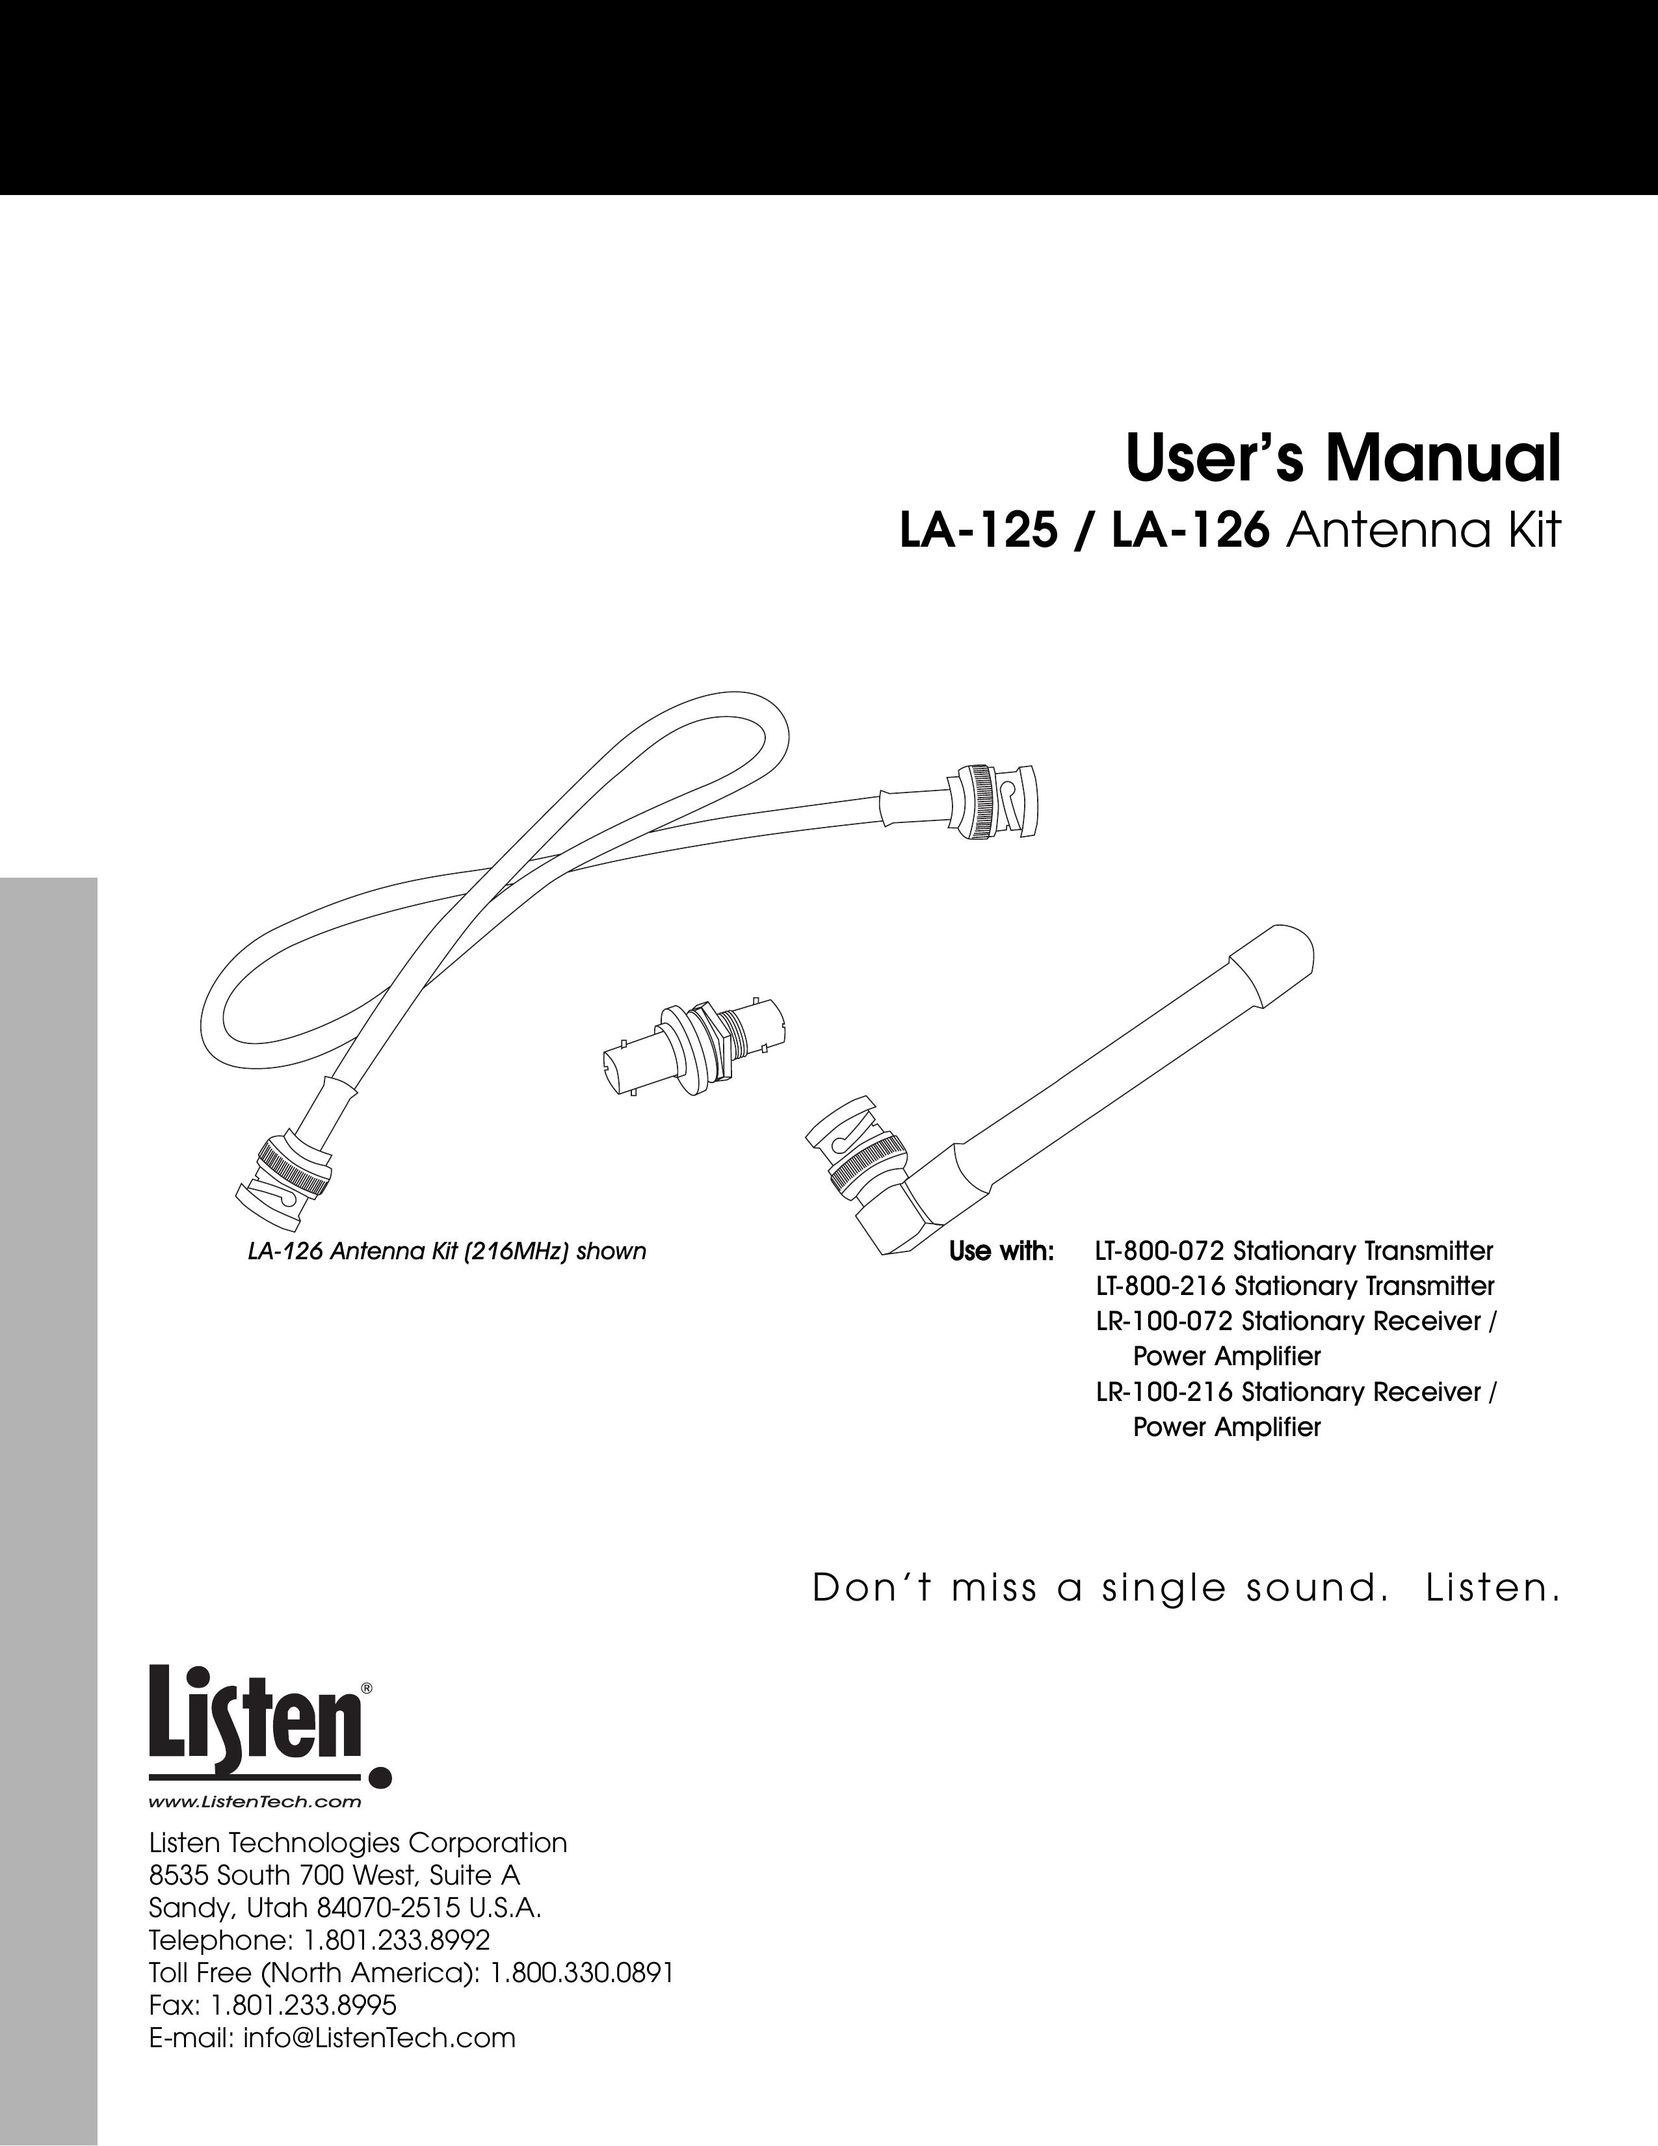 Listen Technologies LA-125 Stereo System User Manual